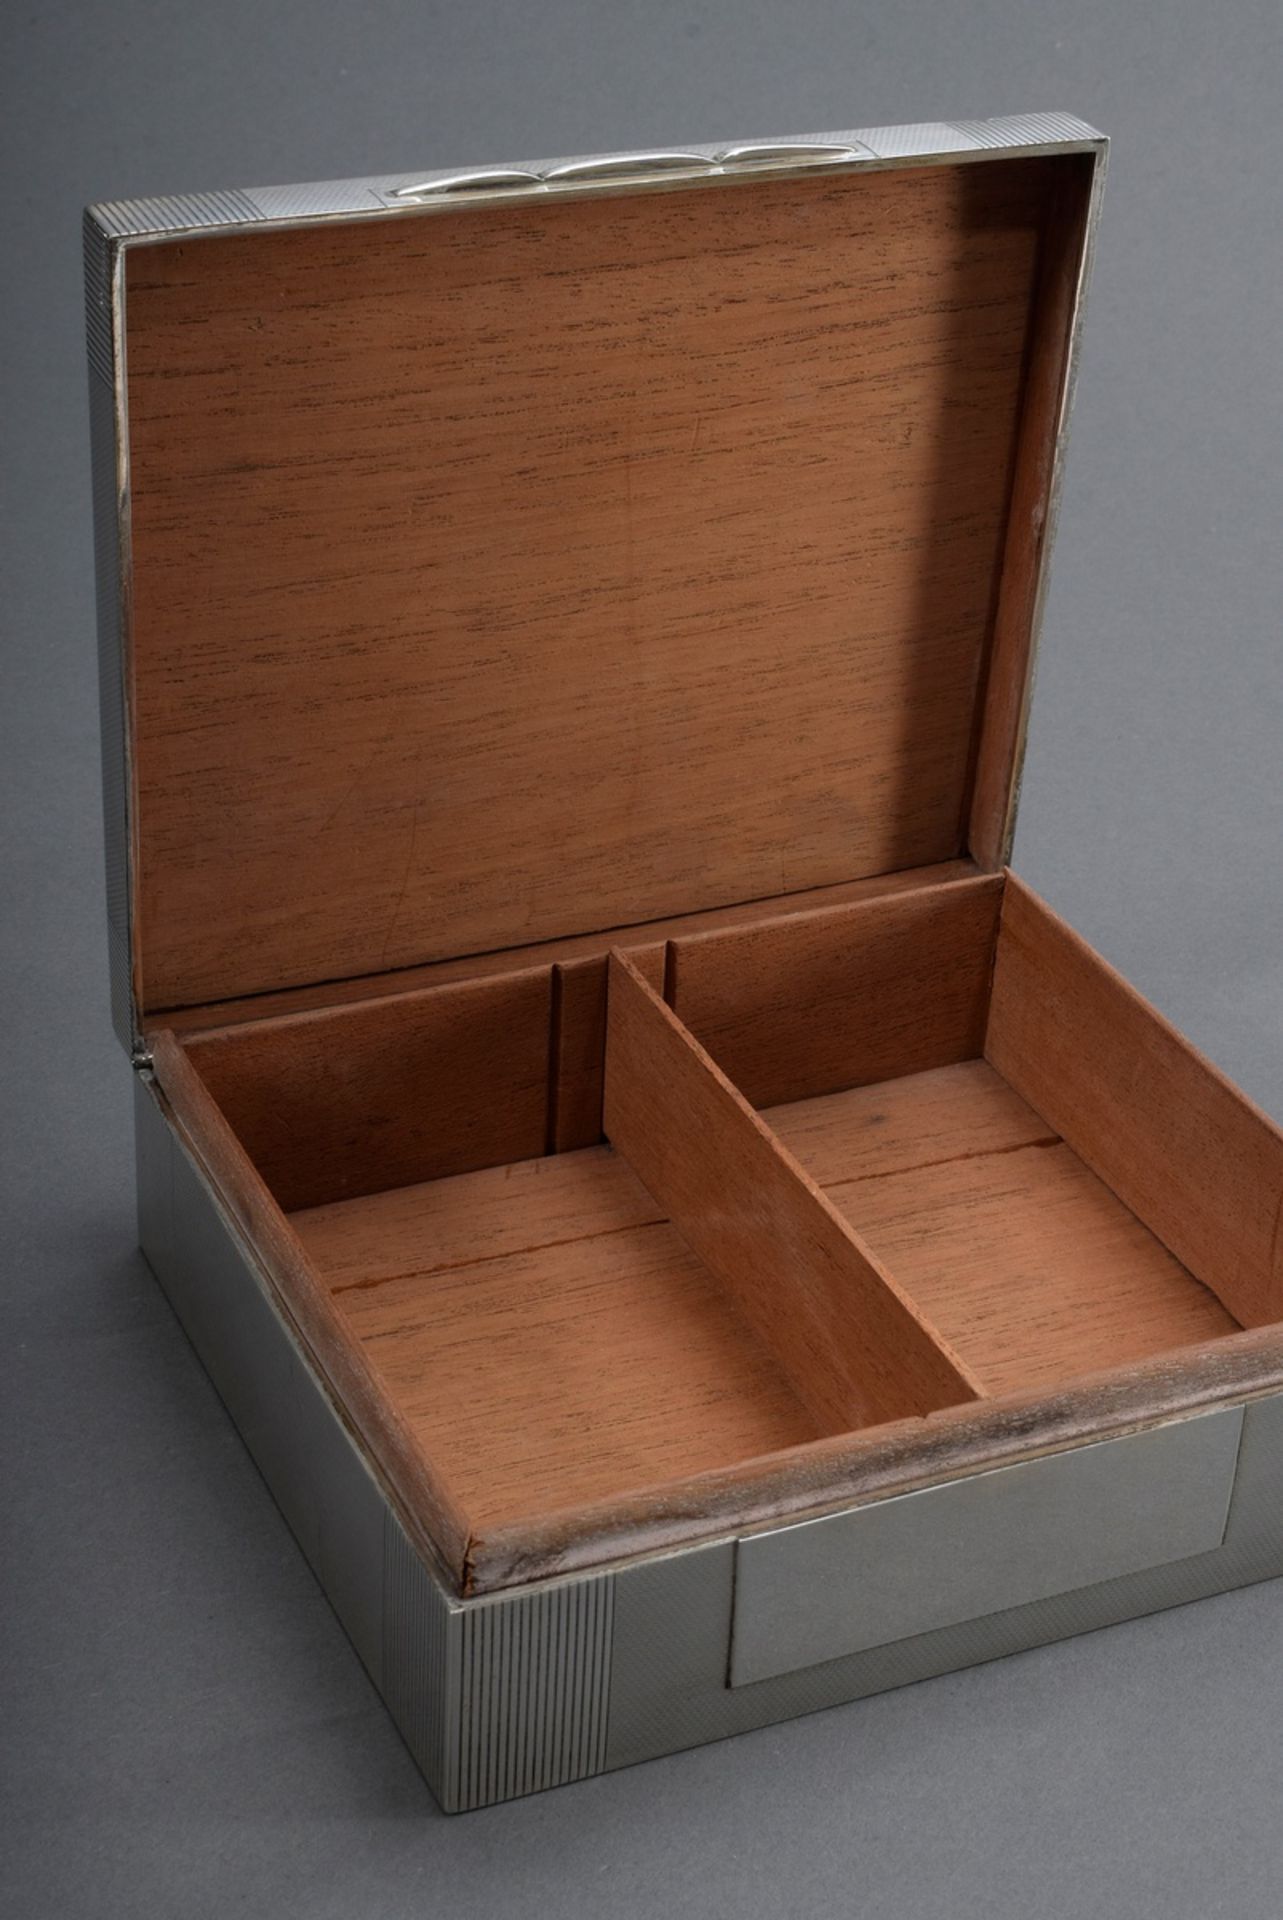 Guillochierte Zigarettenbox mit Holz Interieur, MZ: Henry Perkins & Sons, Birmi - Image 2 of 5